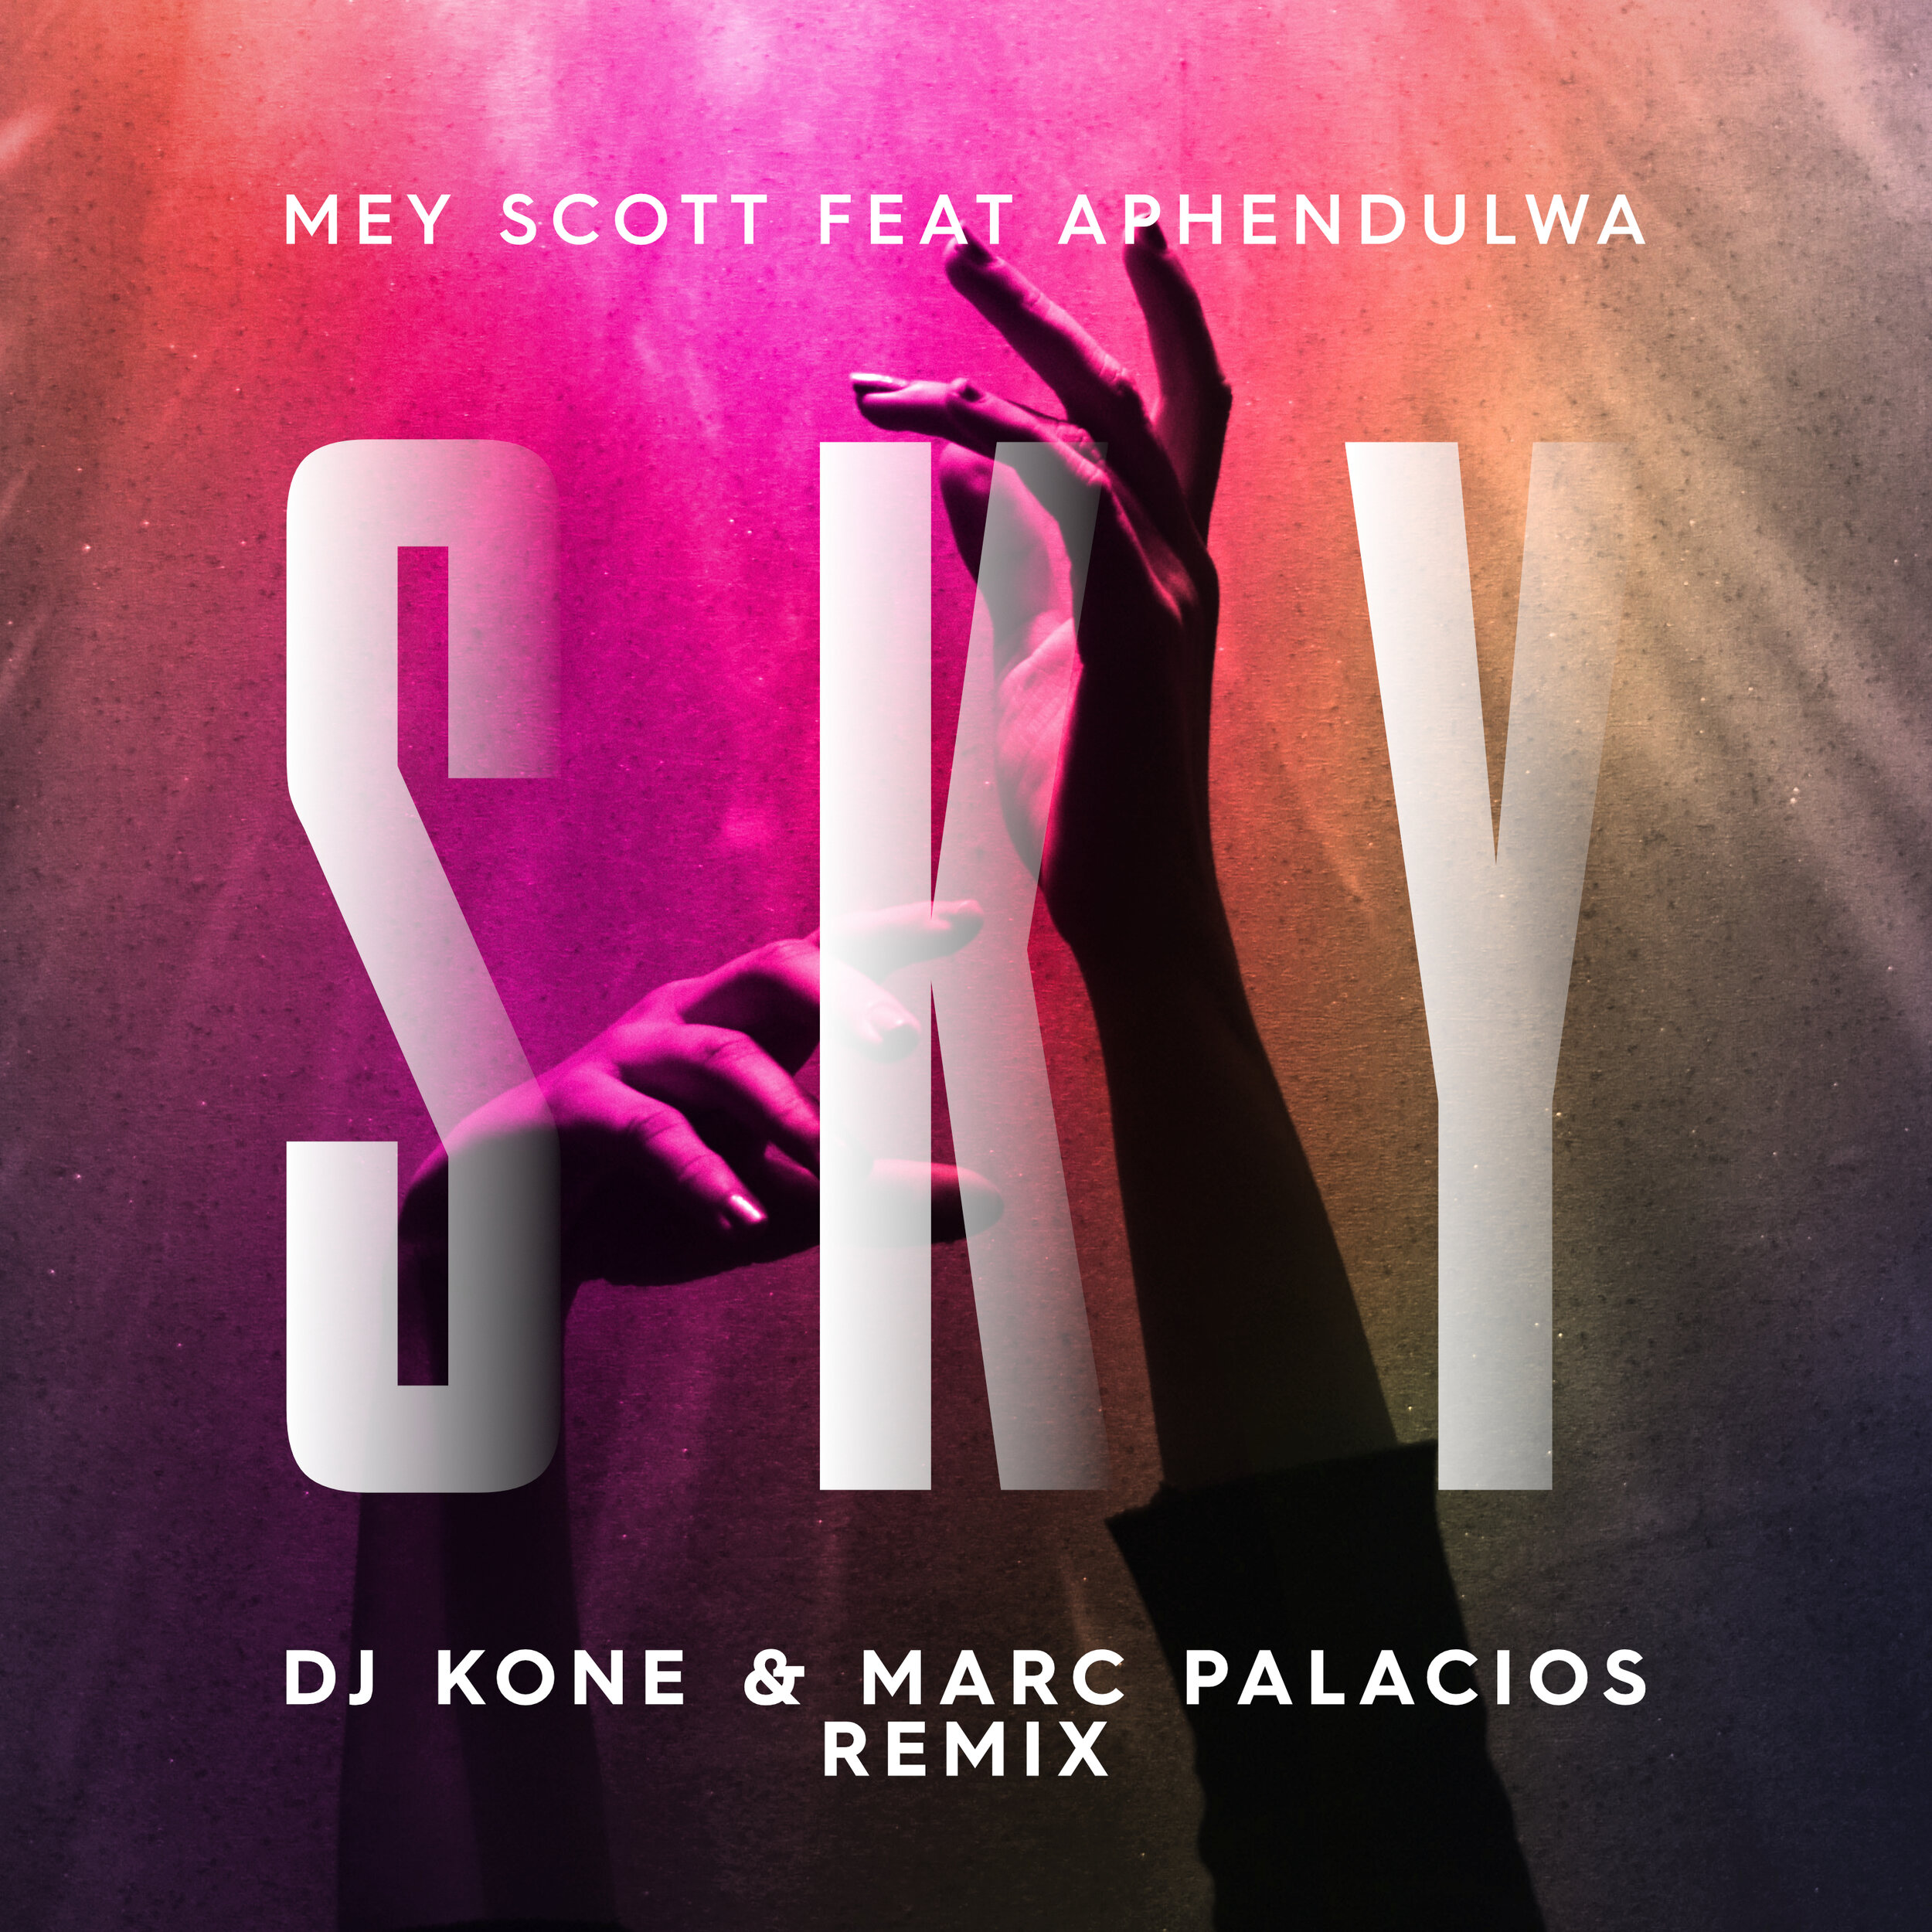 Mey Scott ft. Aphendulwa - Sky (DJ Kone and MArc Placios Remix) - Artwork 2 (1).jpg